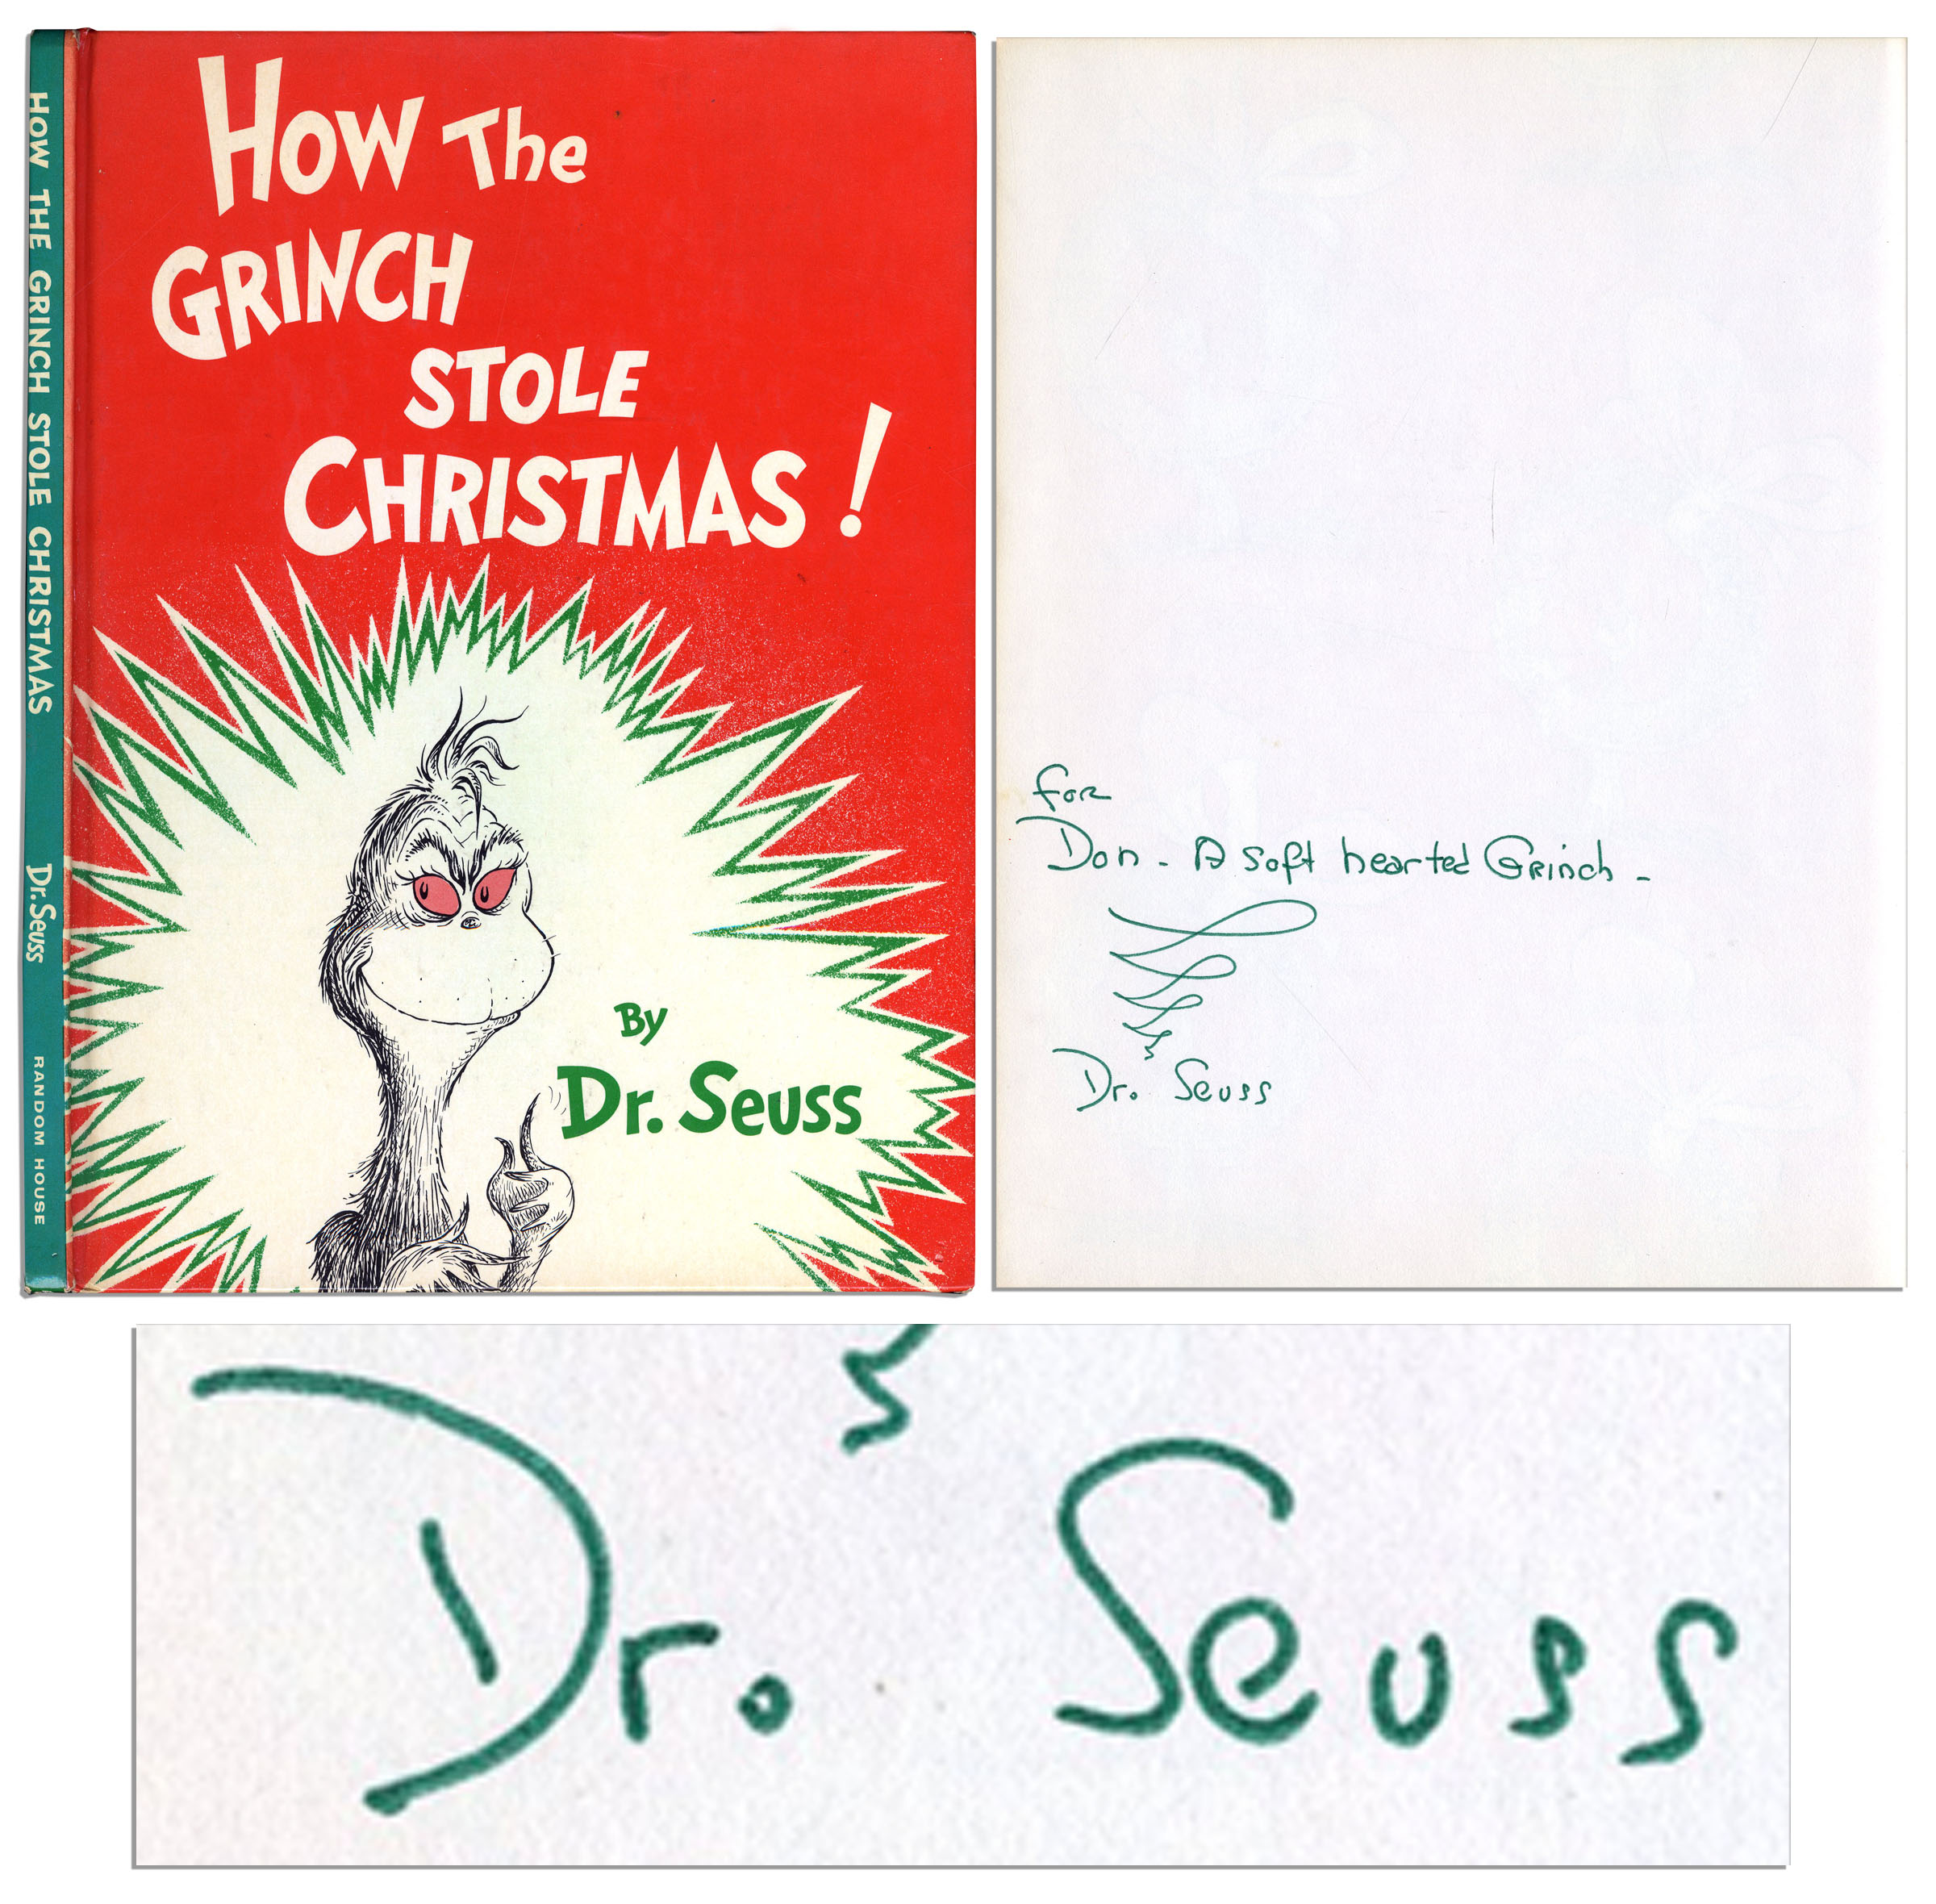 Dr. Seuss Autograph ''How The Grinch Stole Christmas'' Signed by Dr. Seuss & With His Autograph Inscription